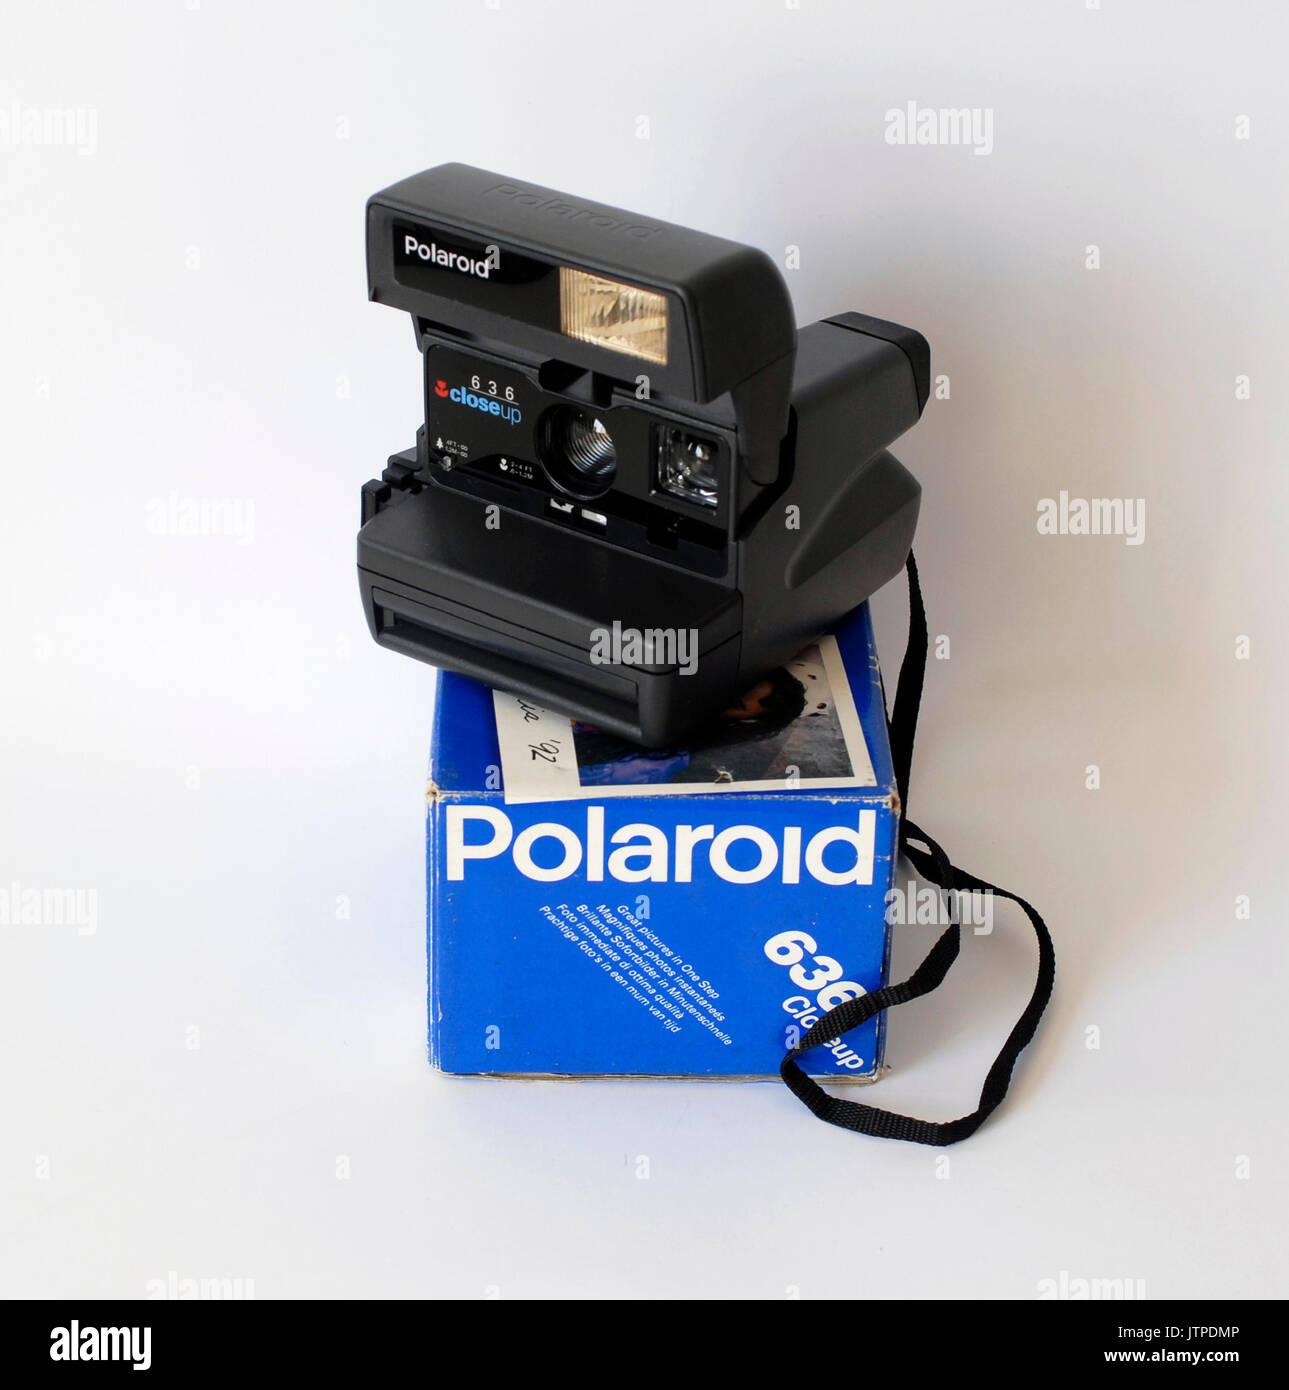 Vintage Photo camera Polaroid 636 Close Up, Made in UK Stock Photo